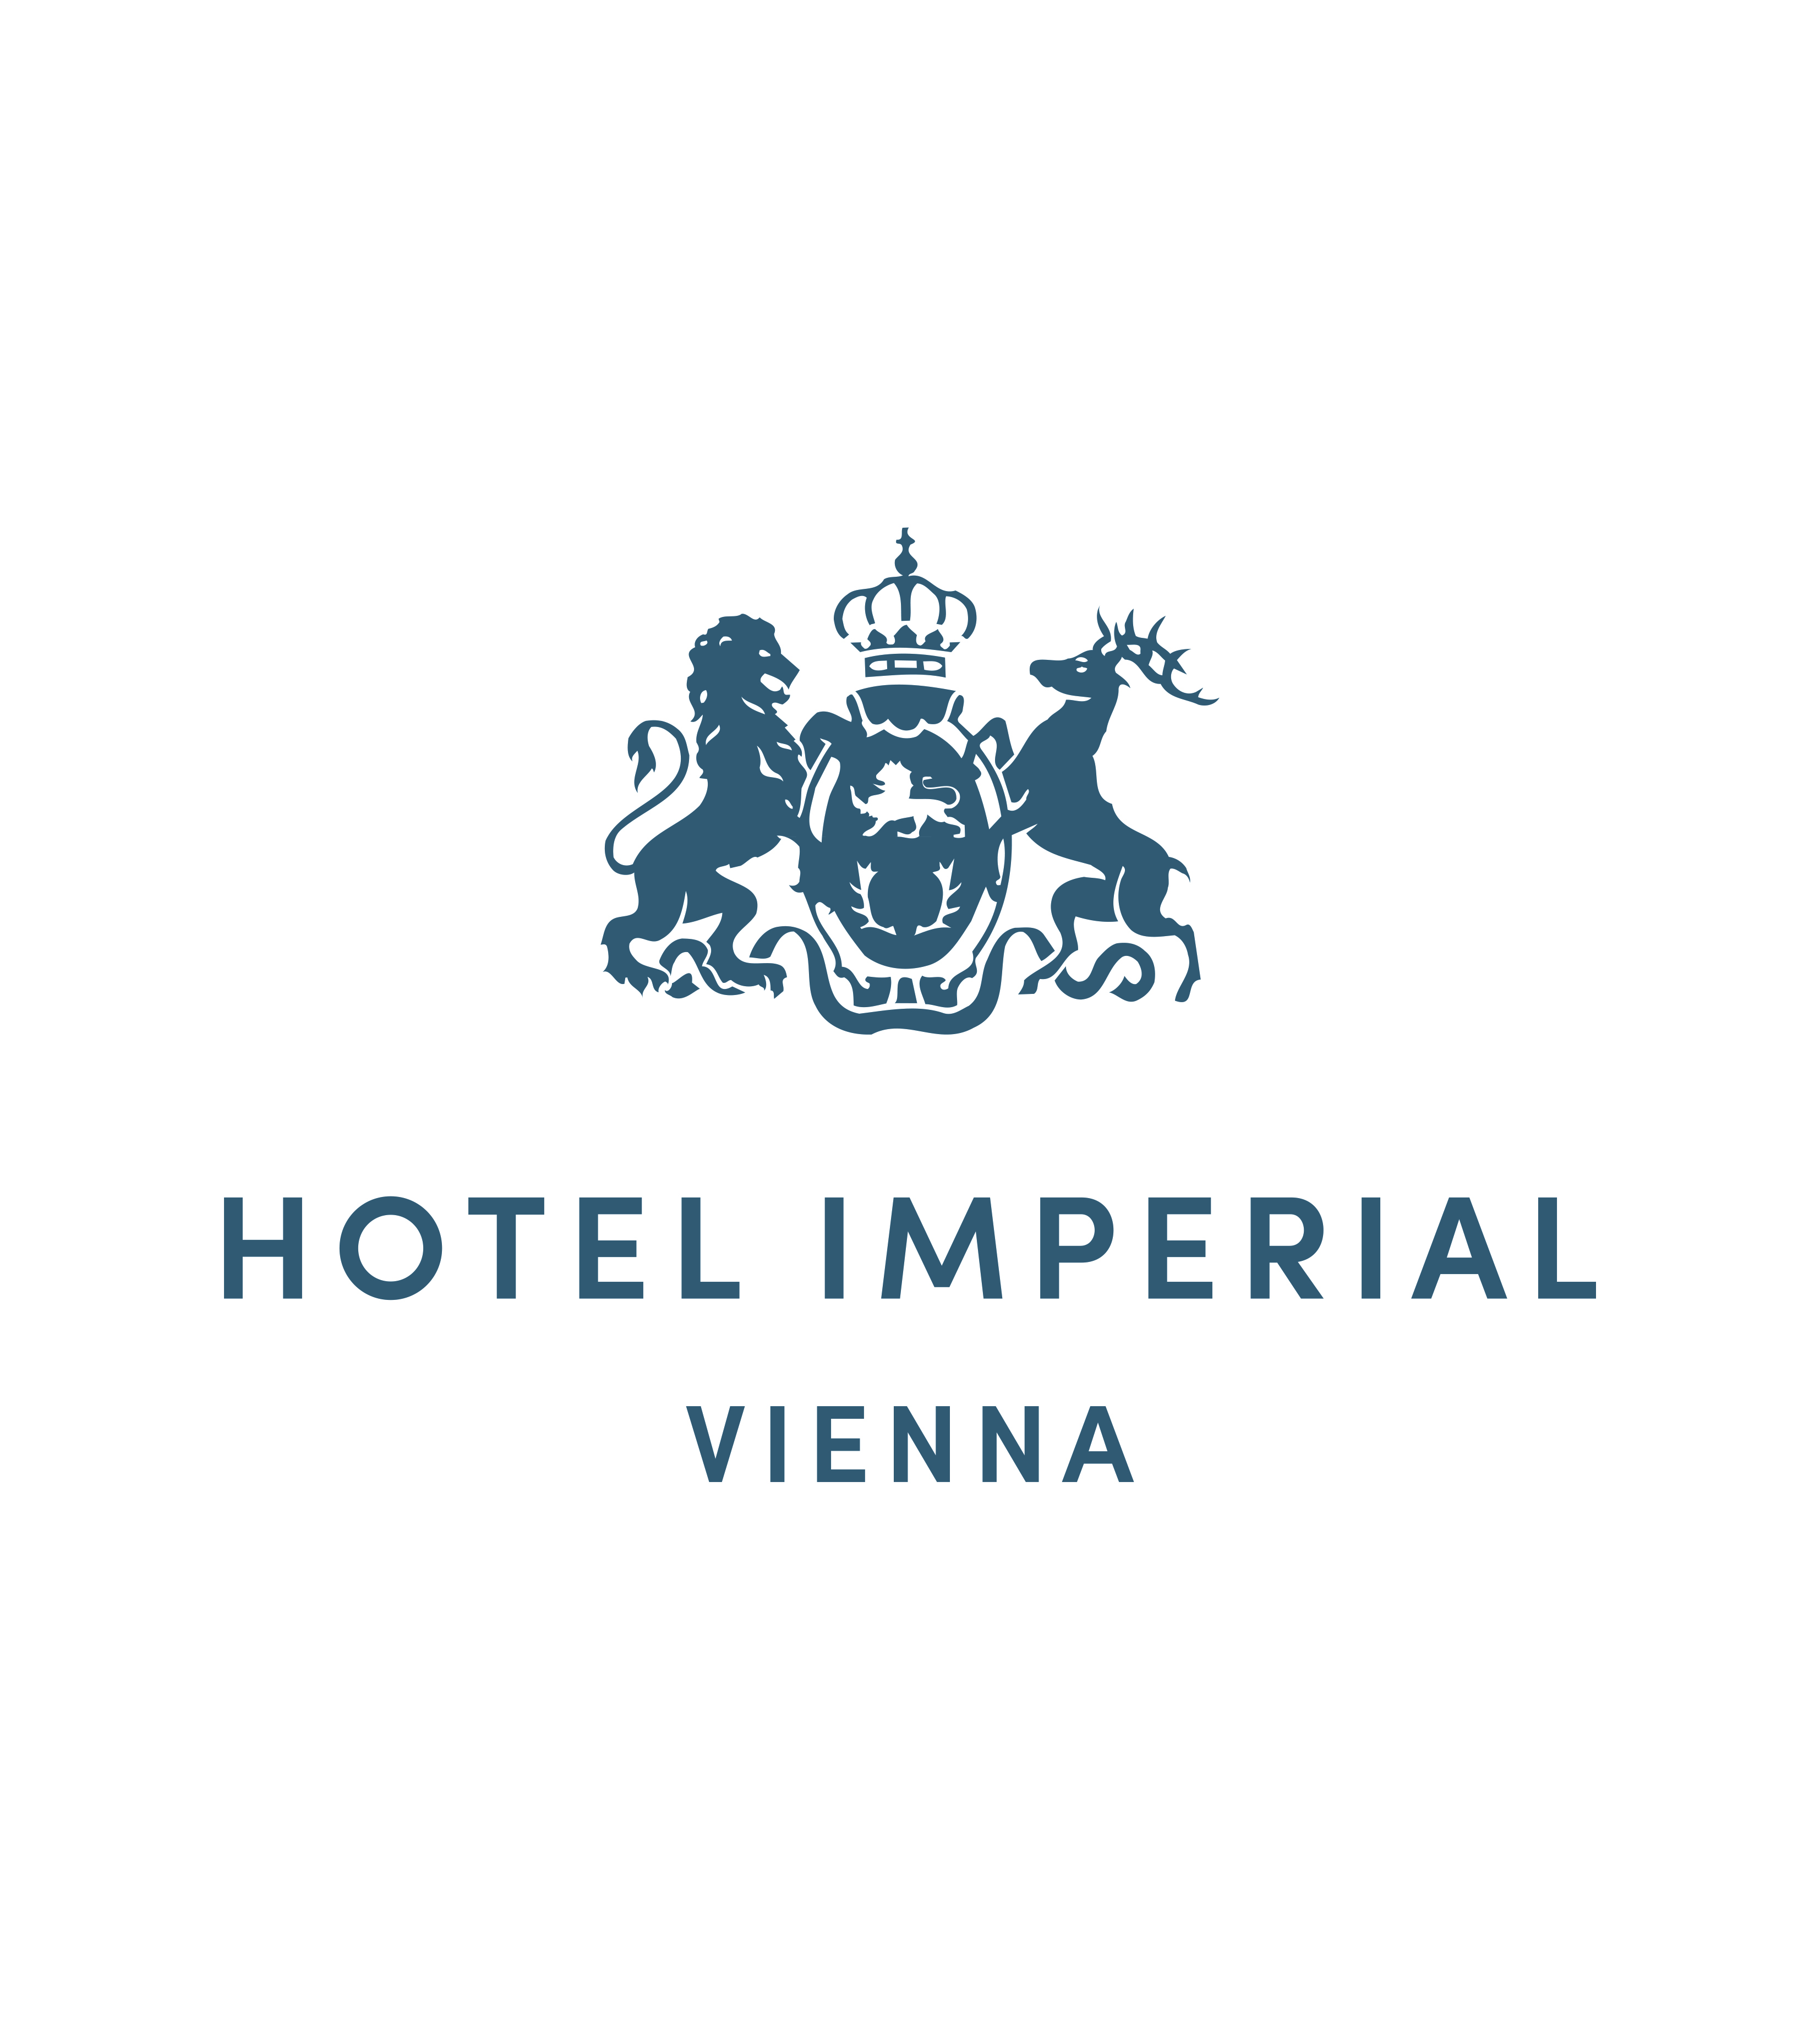 Imperial Hotels Austria GmbH